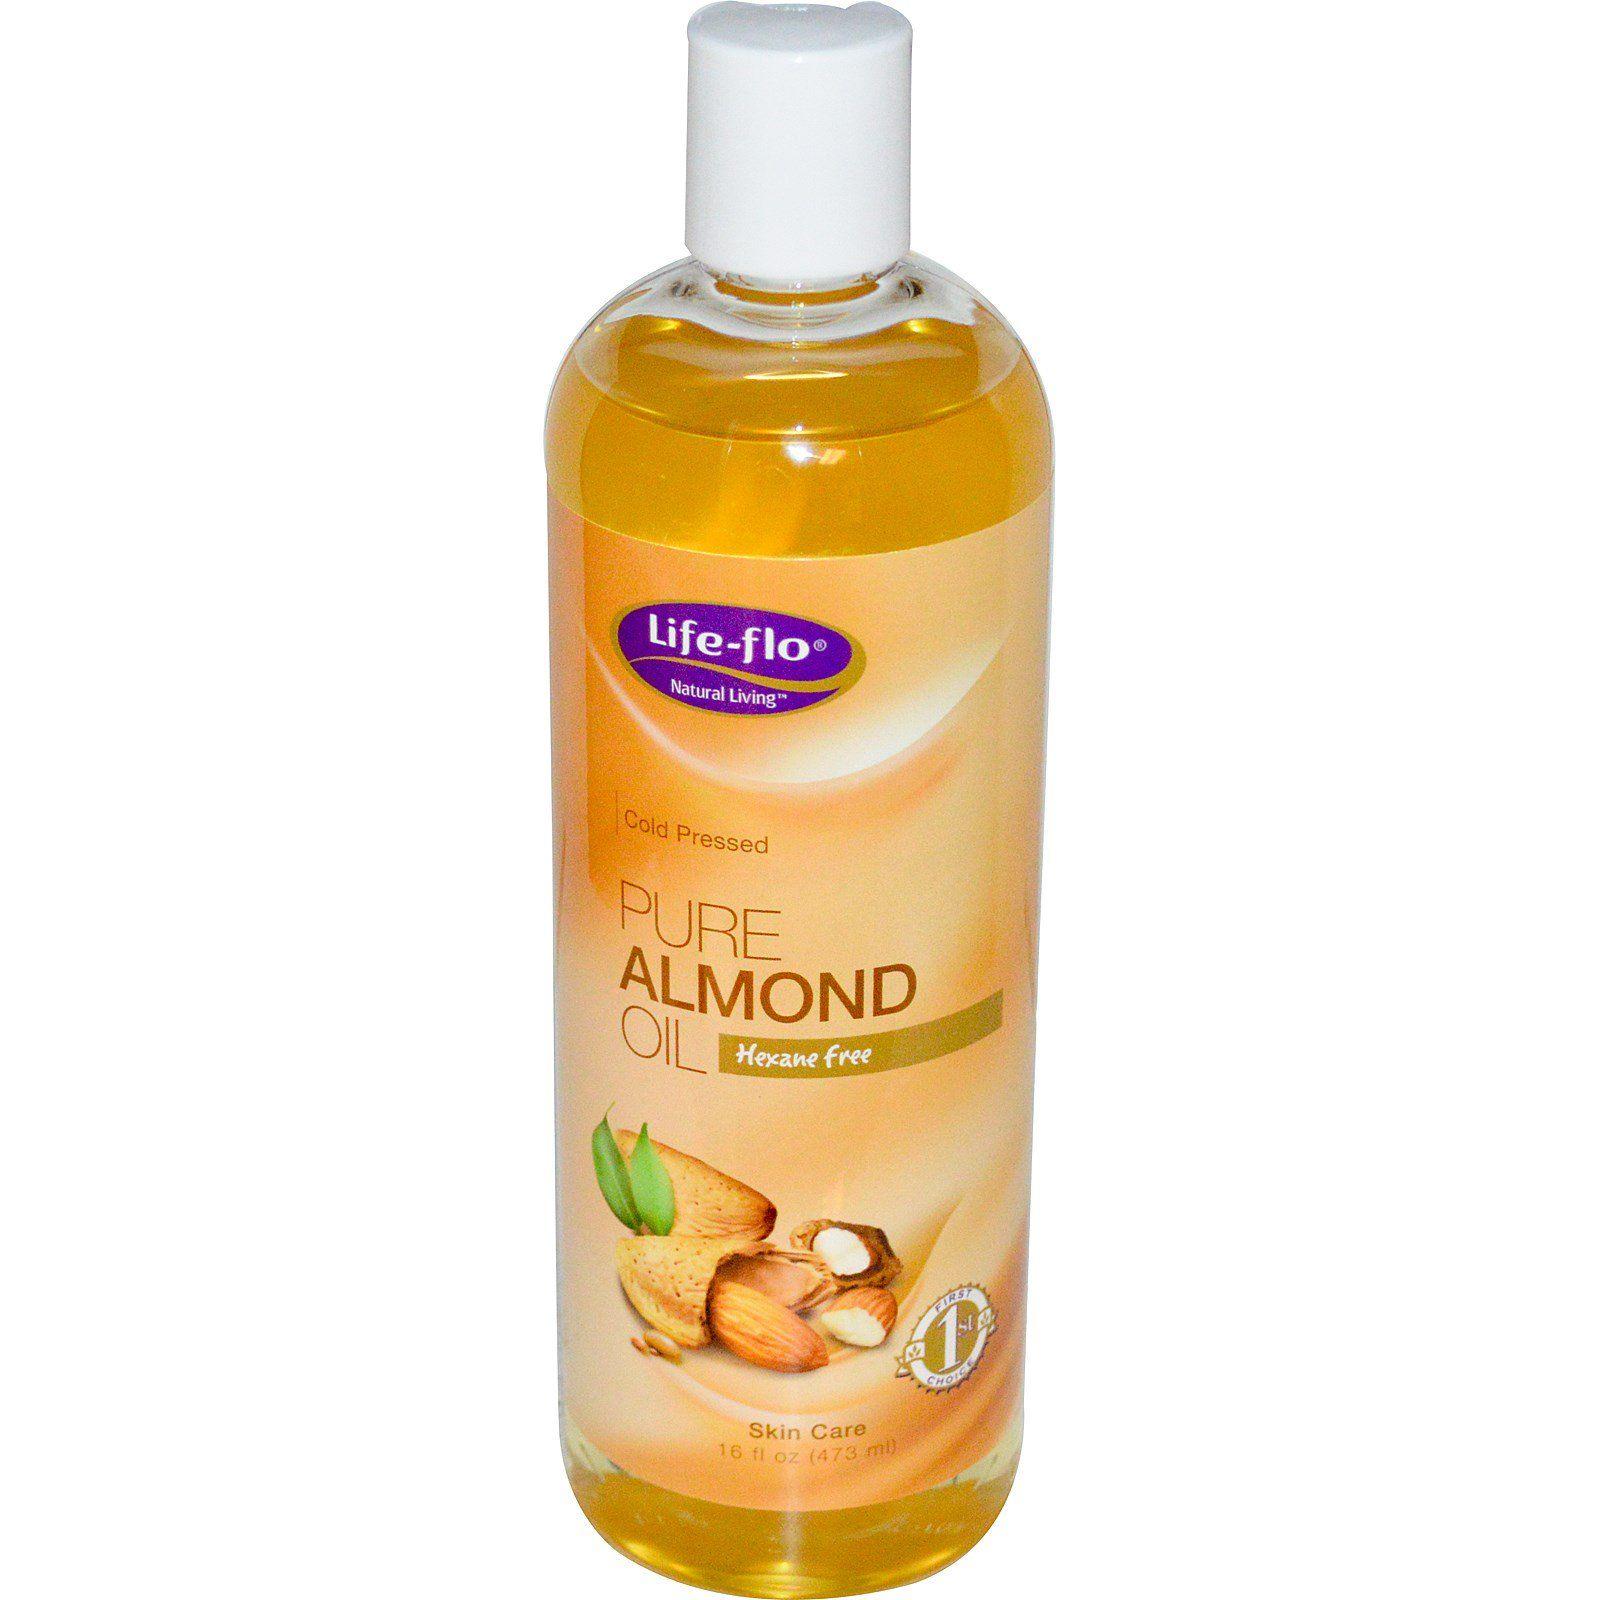 Preach reccomend Almond oil facial care